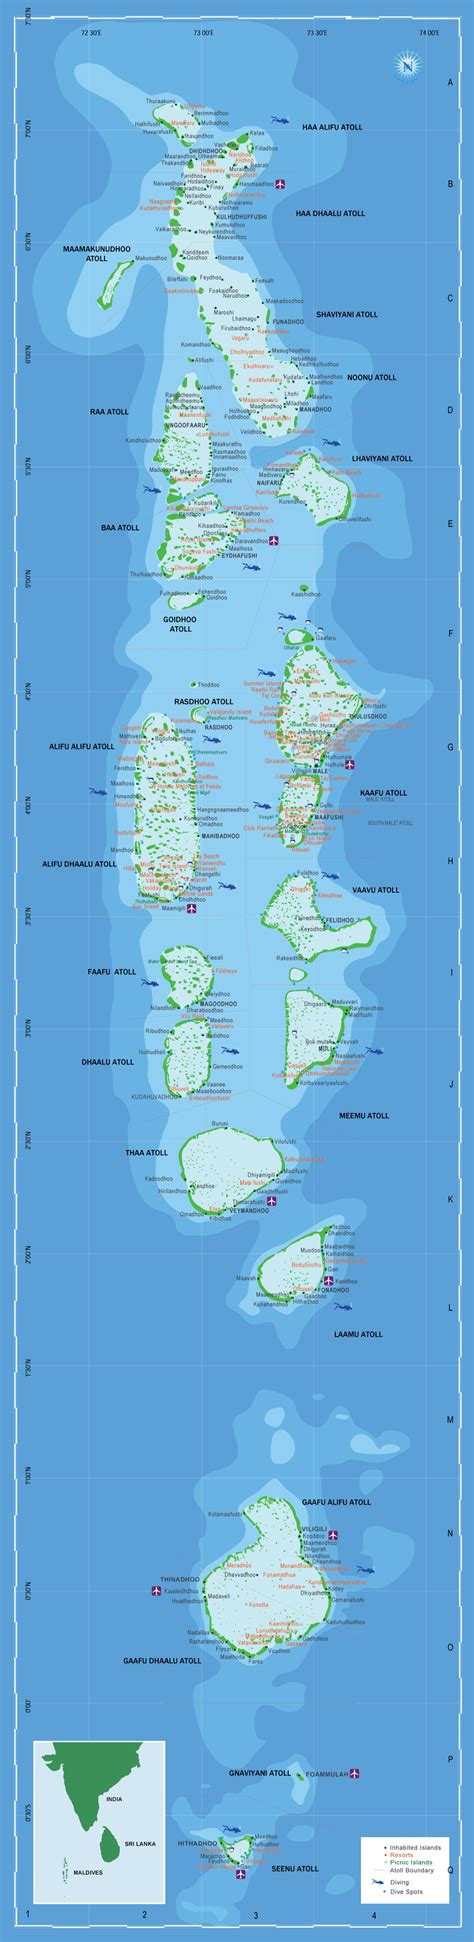 Maldives Map And Geographic Location My Maldives